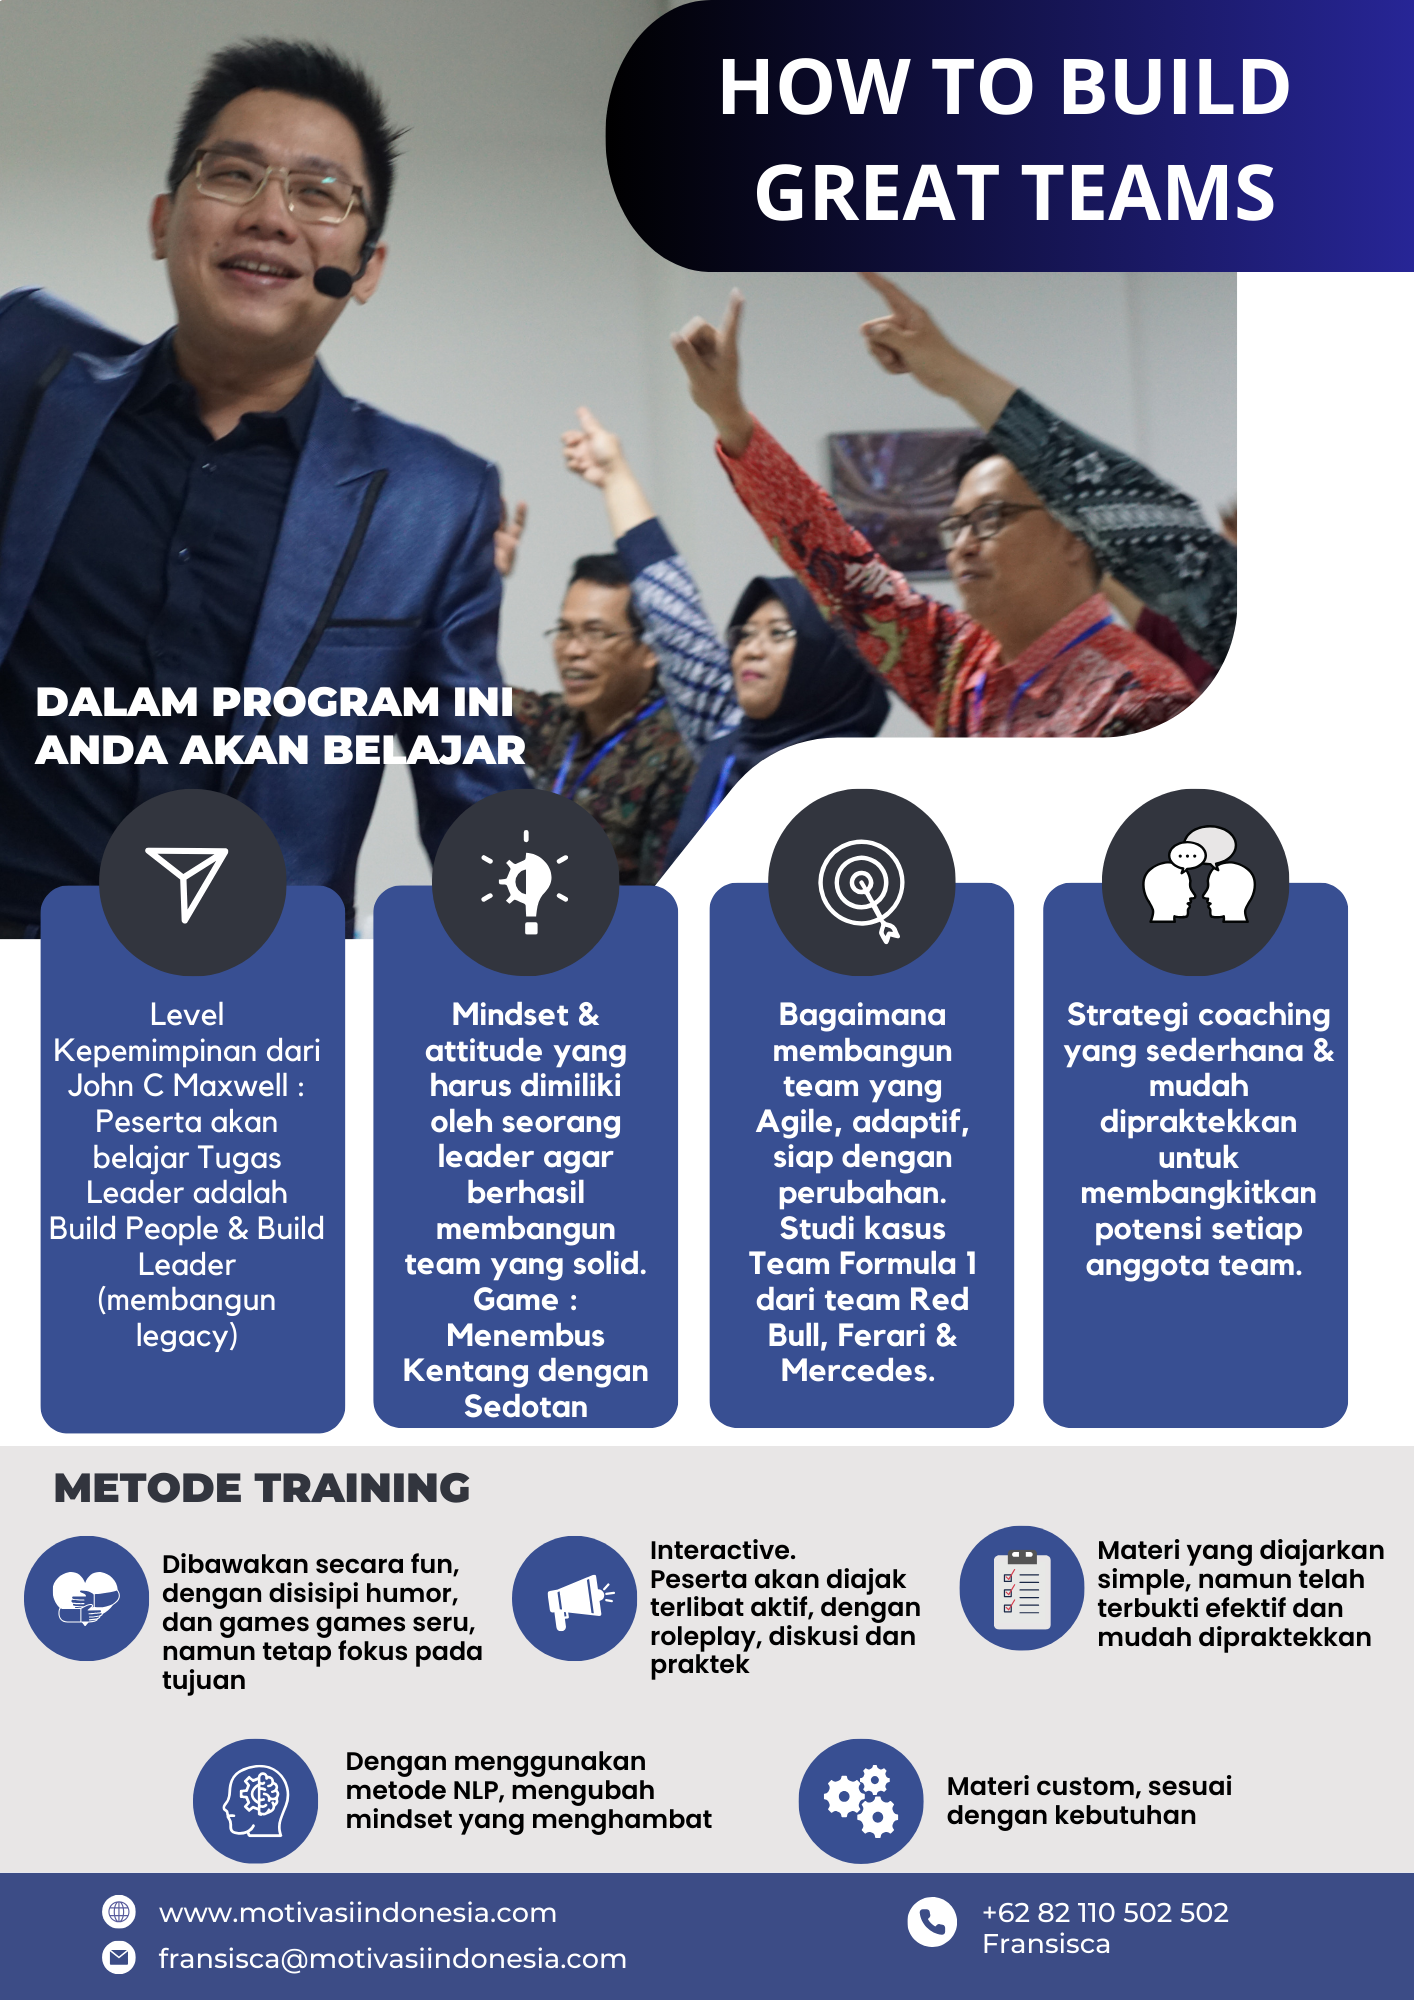 Inhouse Training Leadership & Team work by Christian Adrianto trainer leadership millenial terkenal indonesia